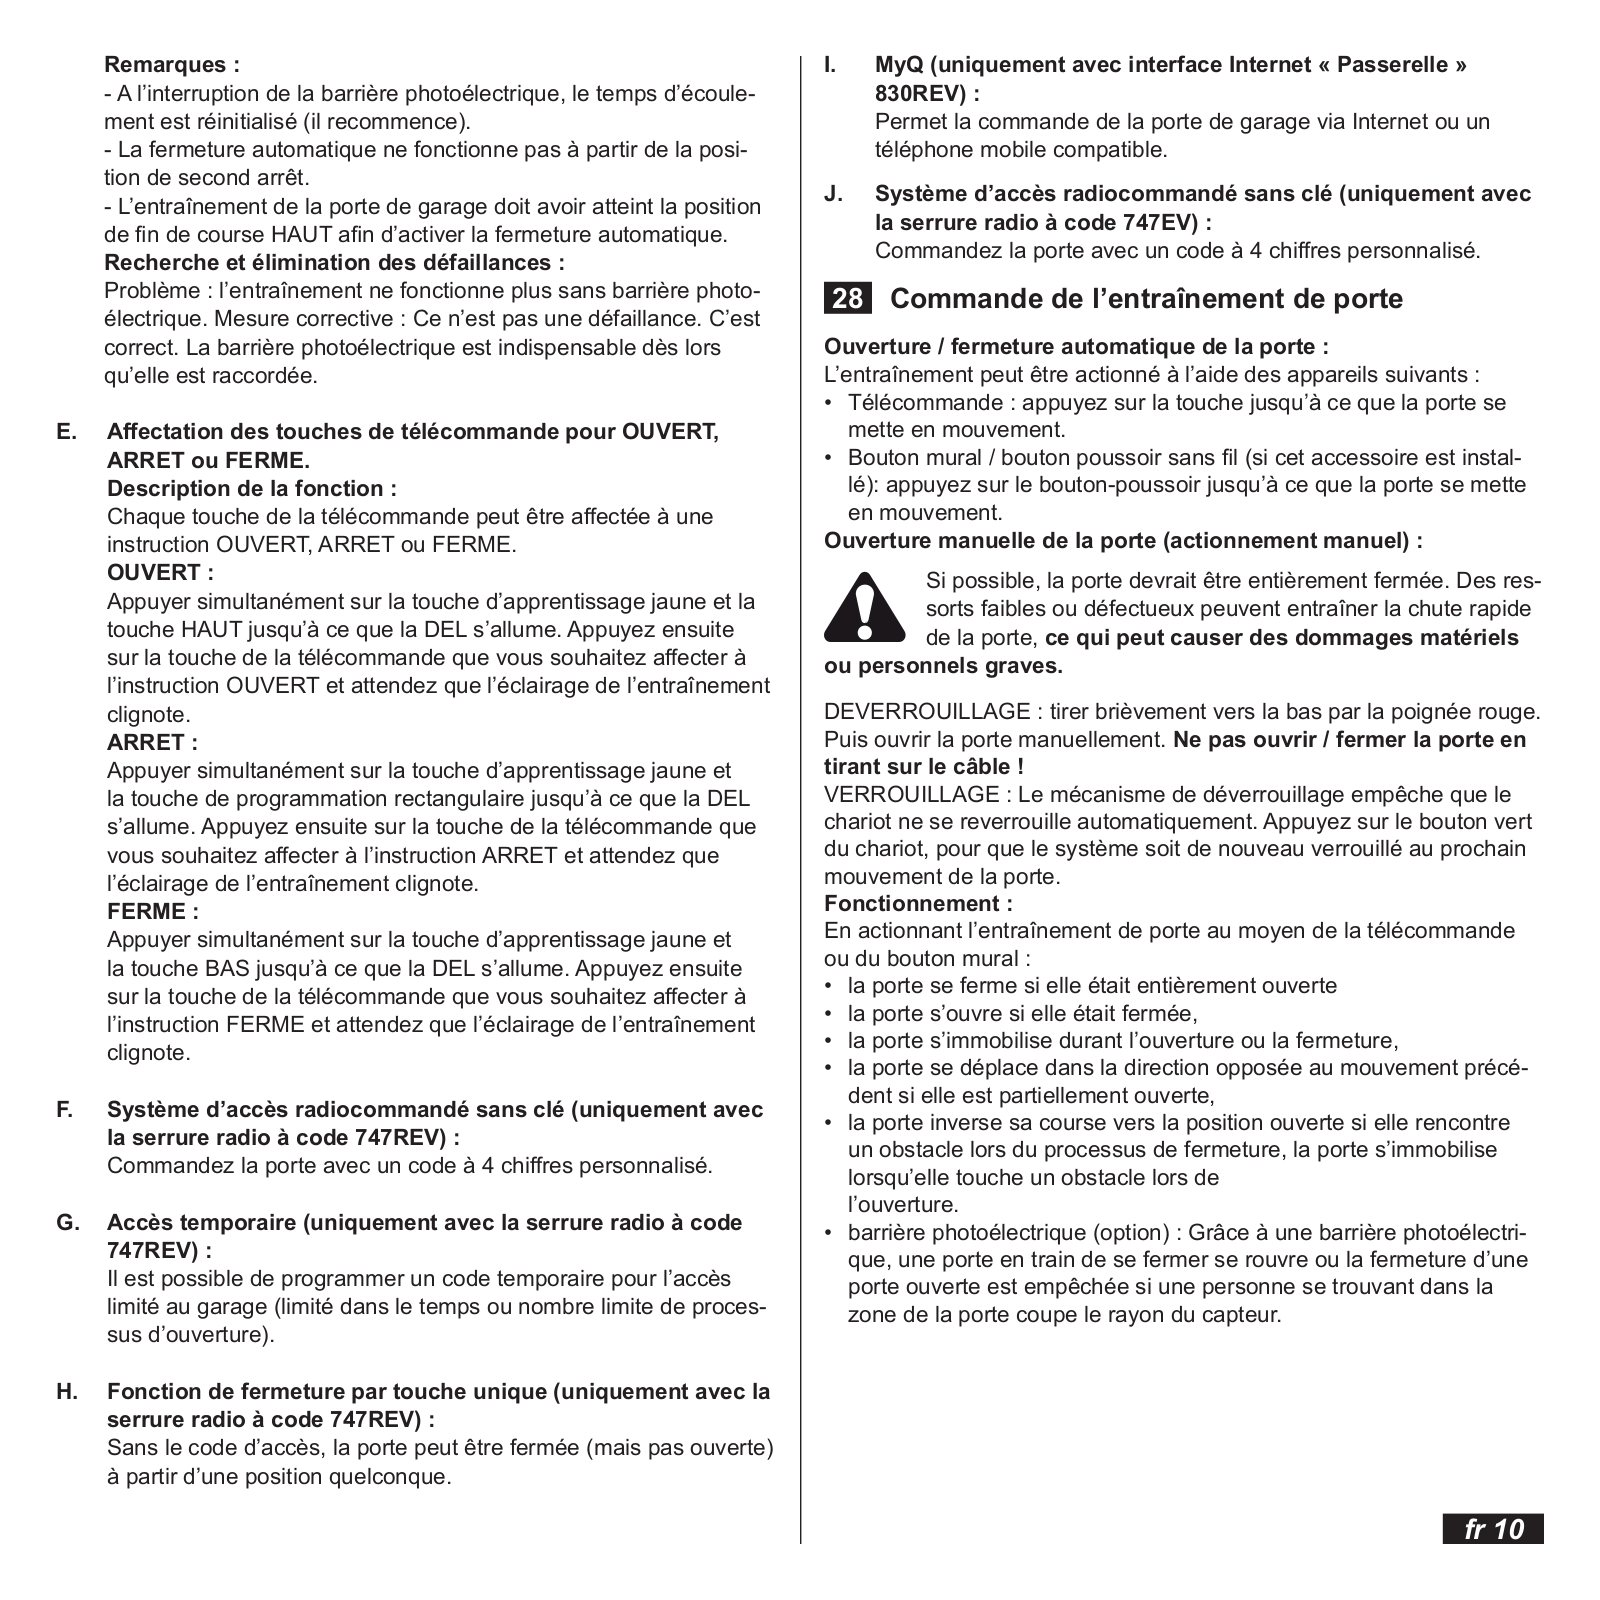 Chamberlain ML810EV, ML1040EV User Manual